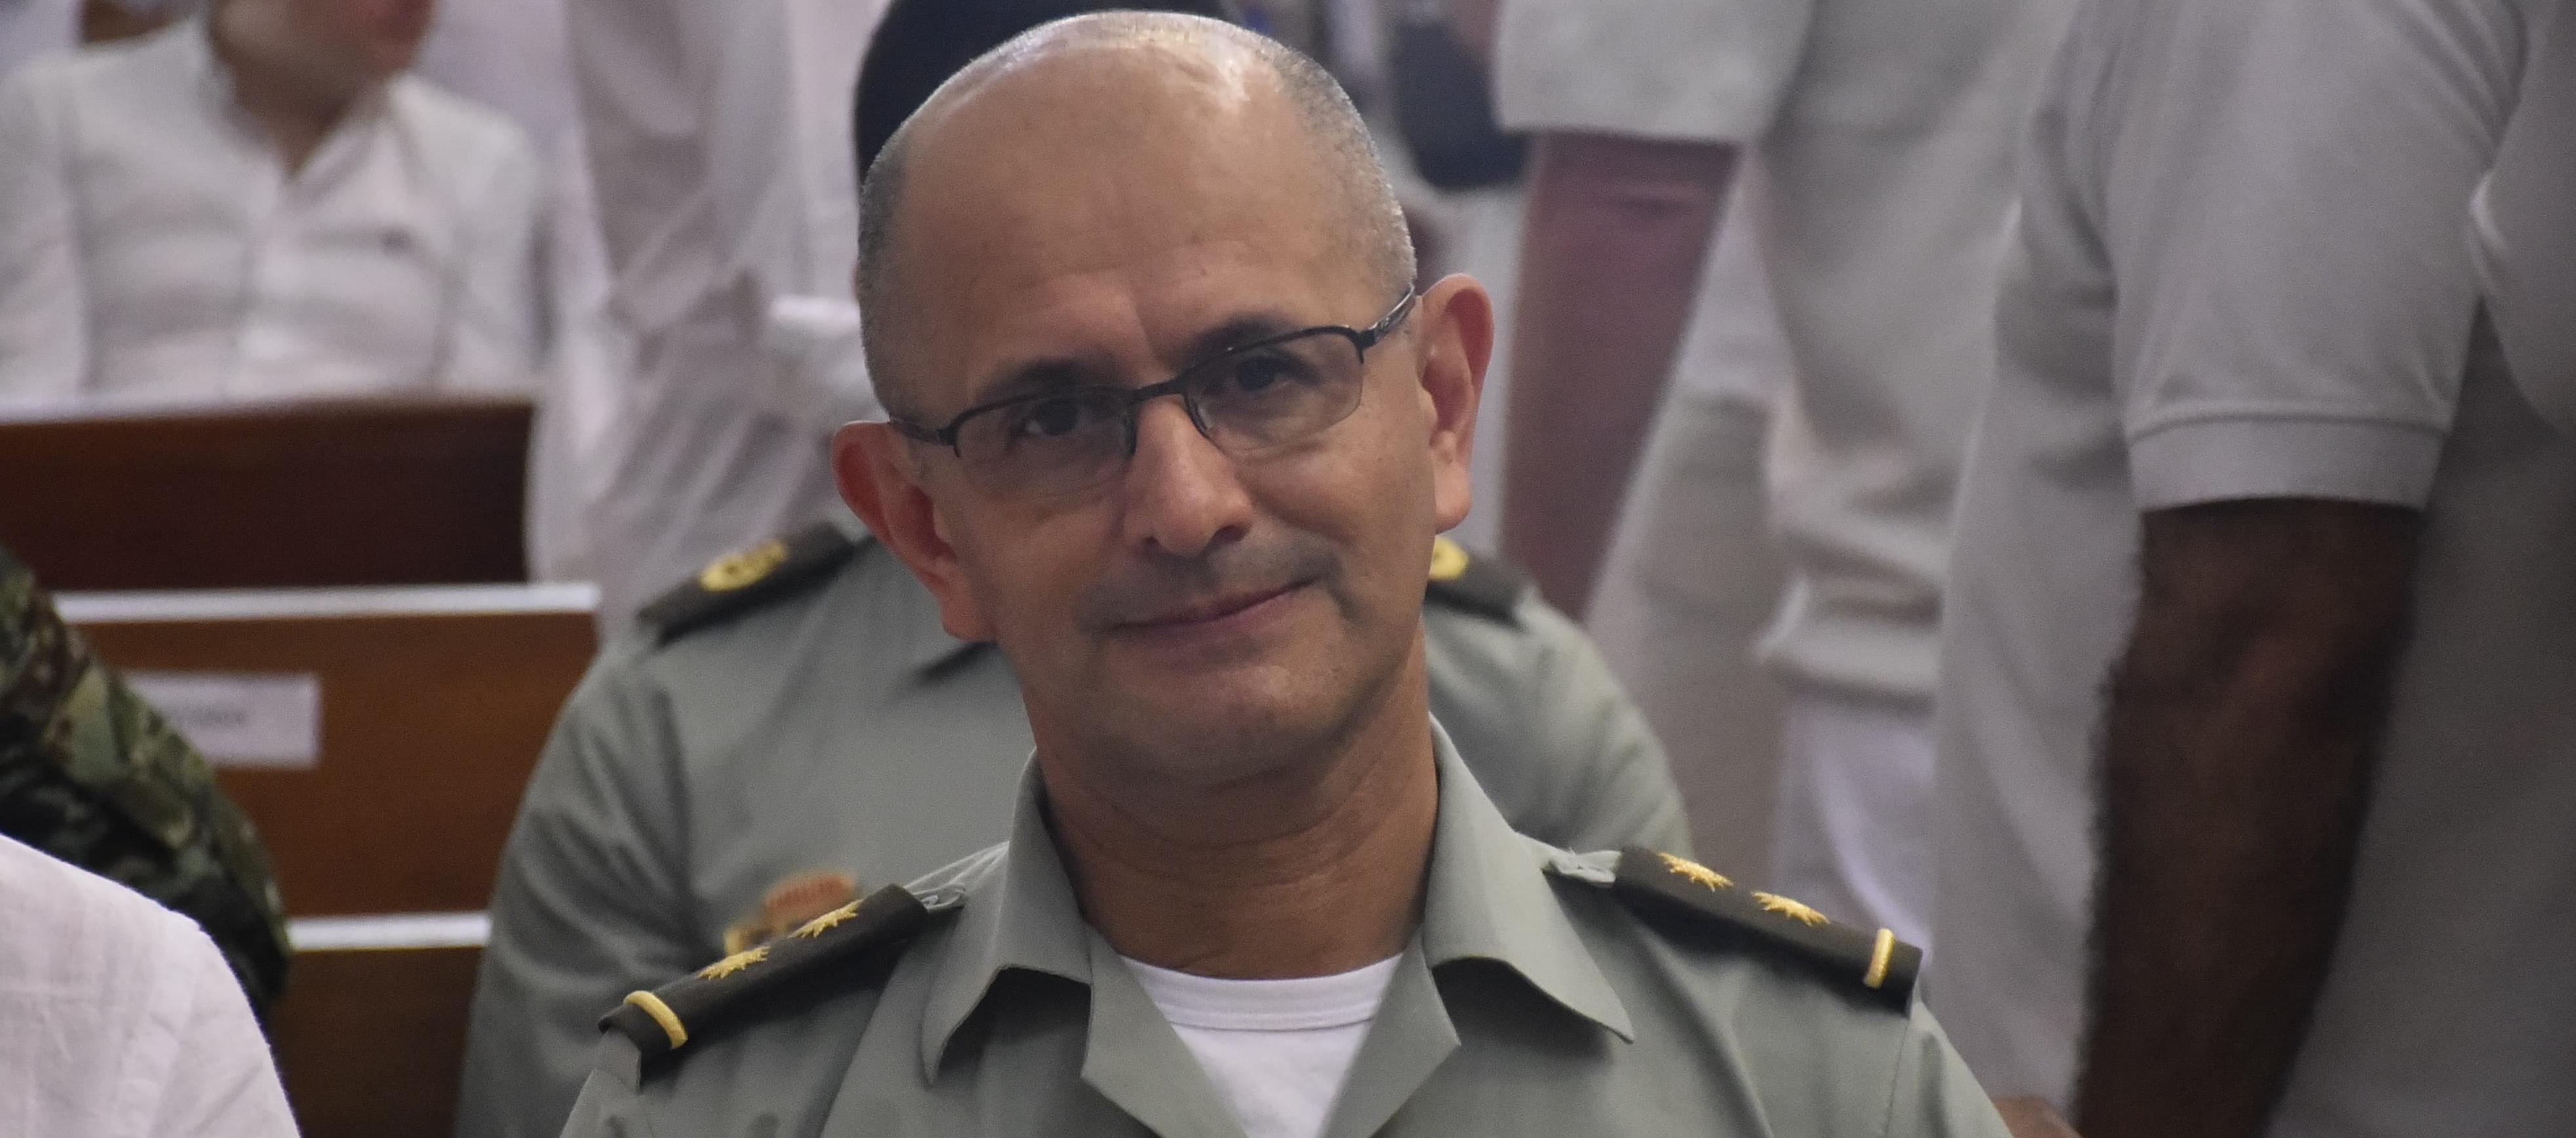 General Jorge Urquijo, comandante de Policía Metropolitana de Barranquilla.